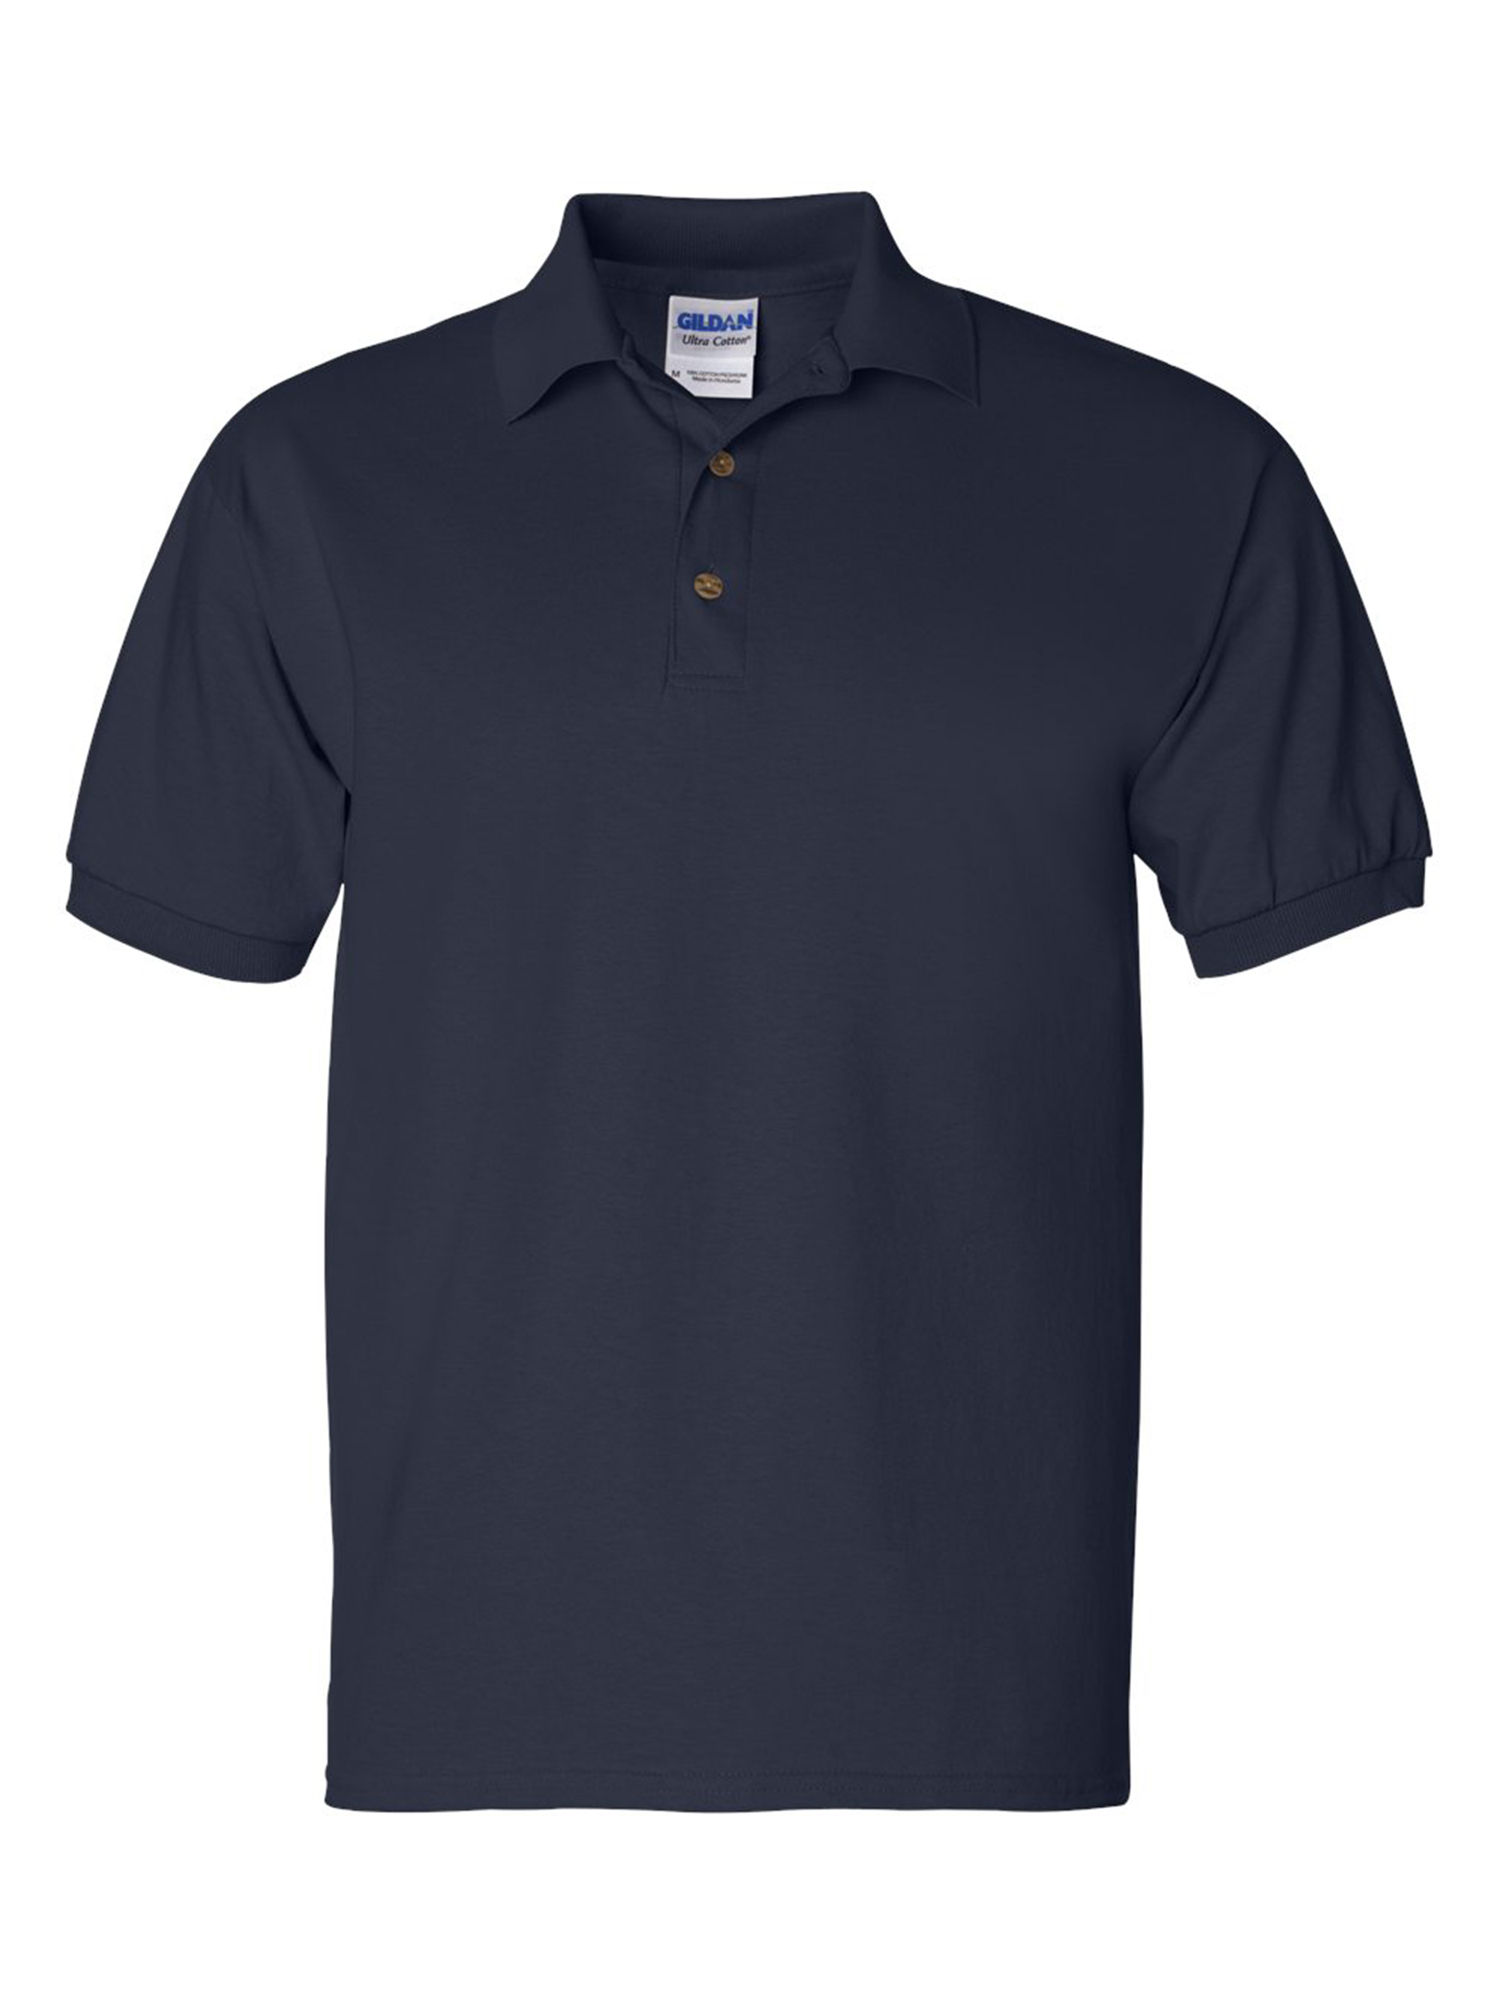 Navy Shirts for Men Polo Shirts for Men Gildan Jersey Polo Sport Shirt 8800 S M L XL 2XL Button Down T Shirts for Mens Polo Shirts with Colors Business Casual School - image 1 of 2